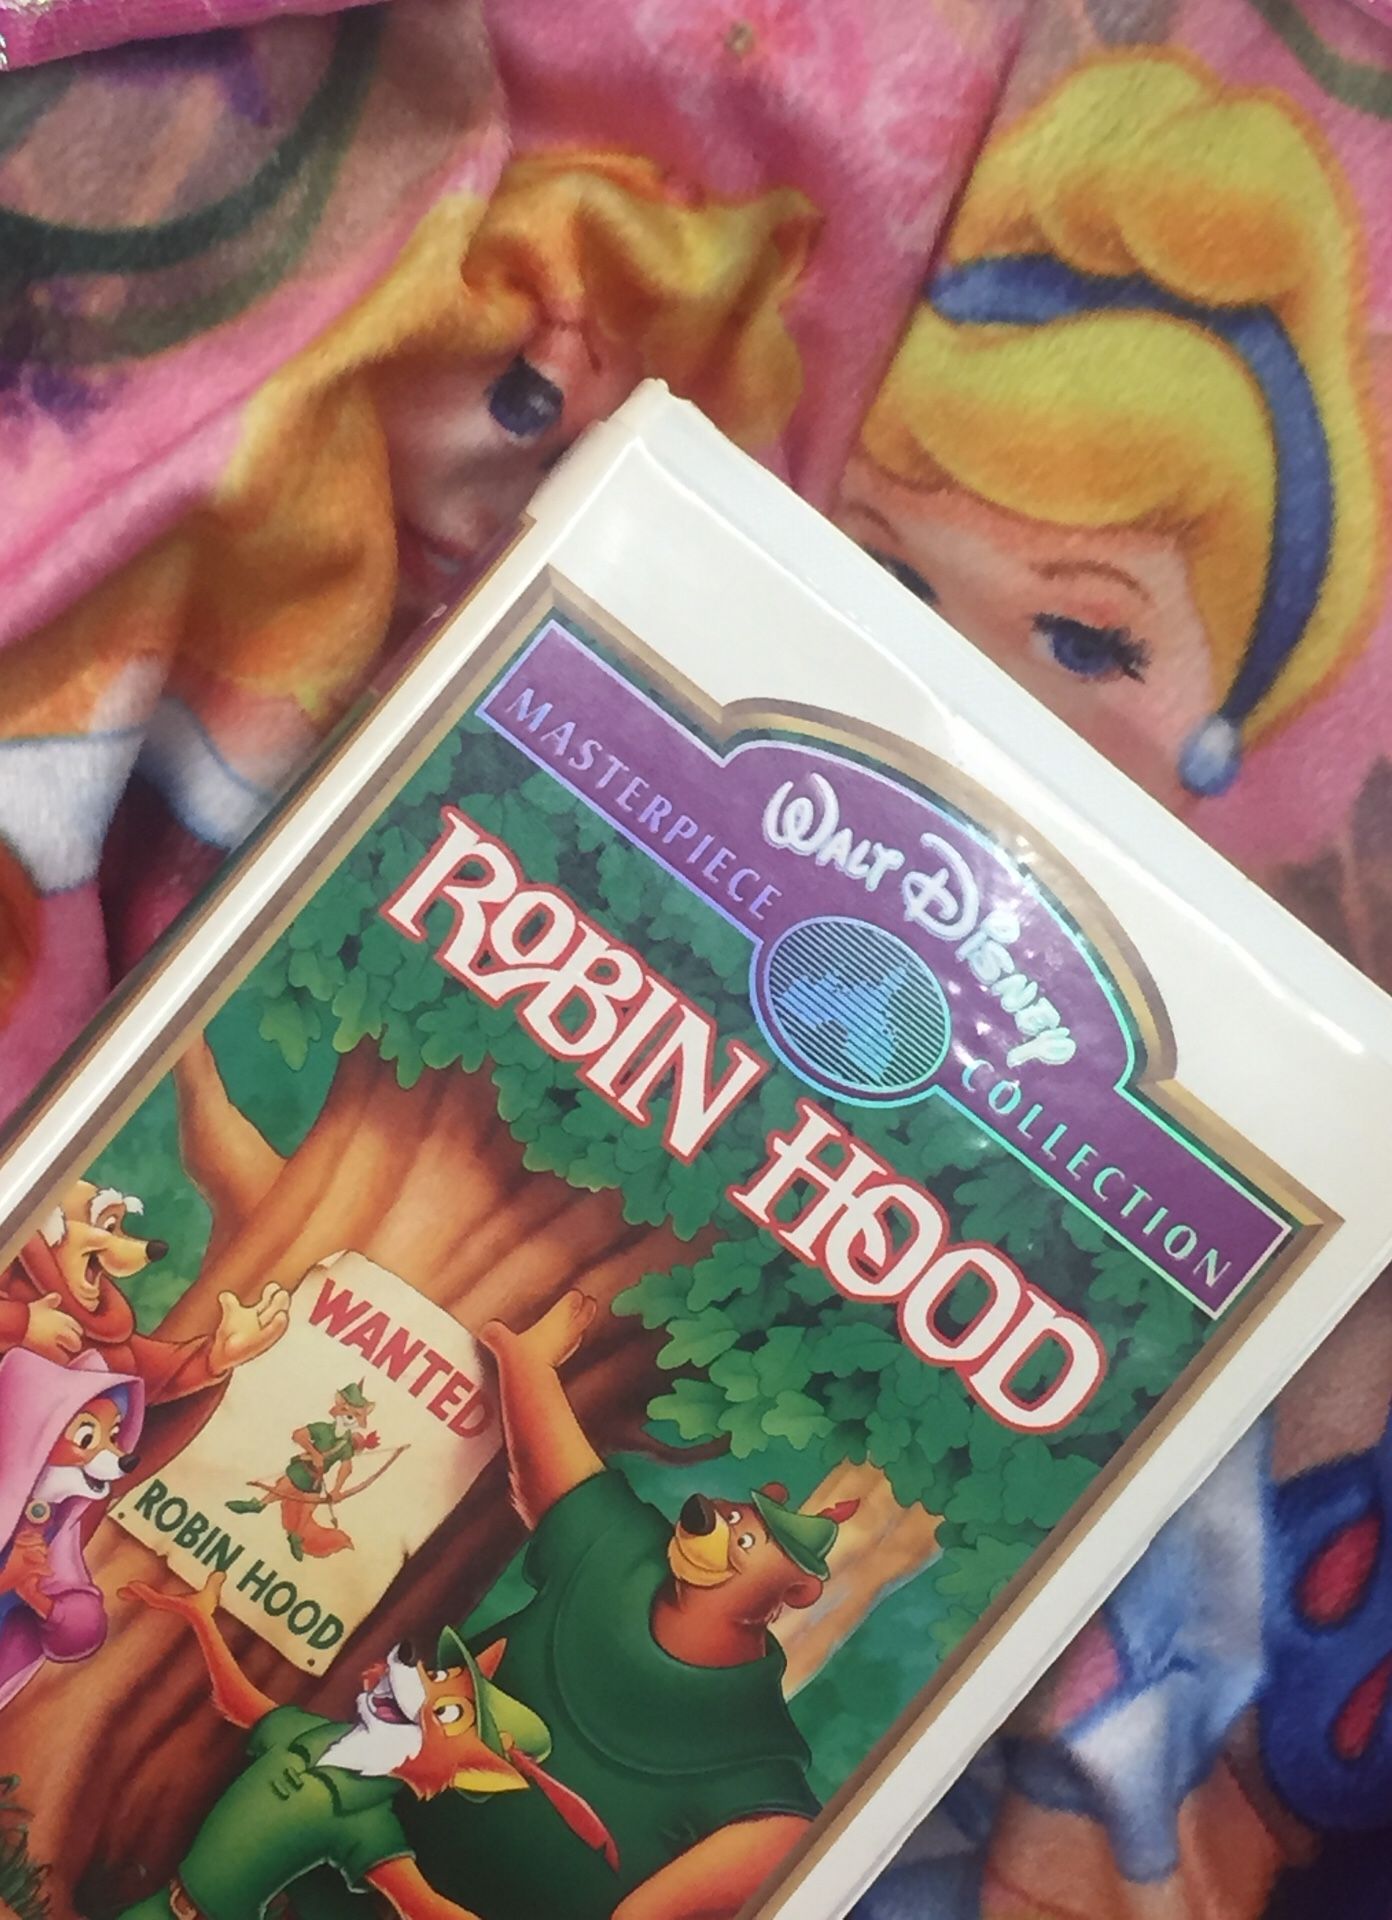 Robin Hood VHS